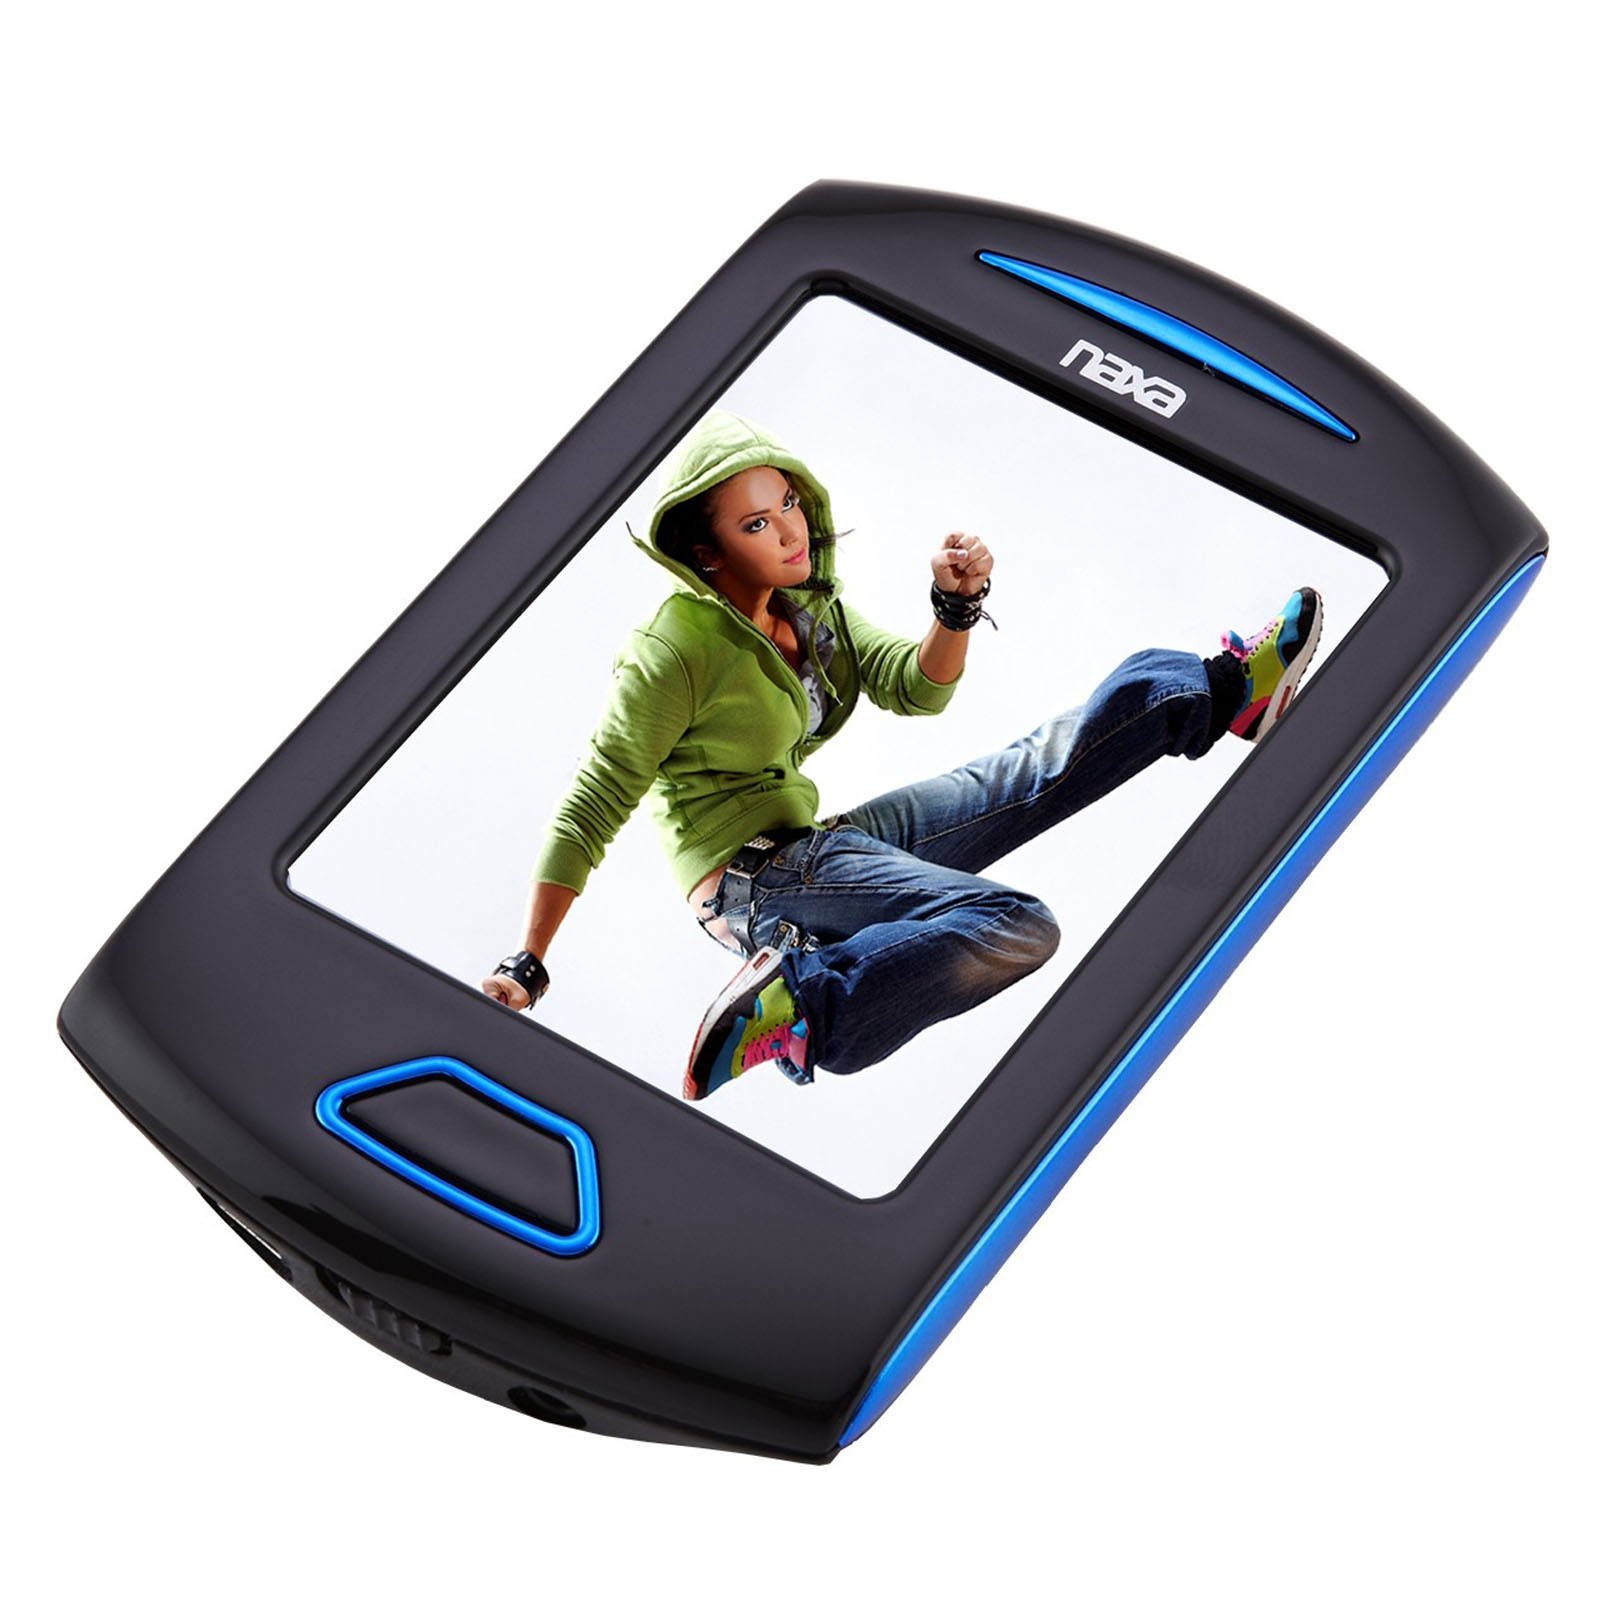 Naxa 4GB 2.8" Touchs Display Portable Media Player - image 1 of 3